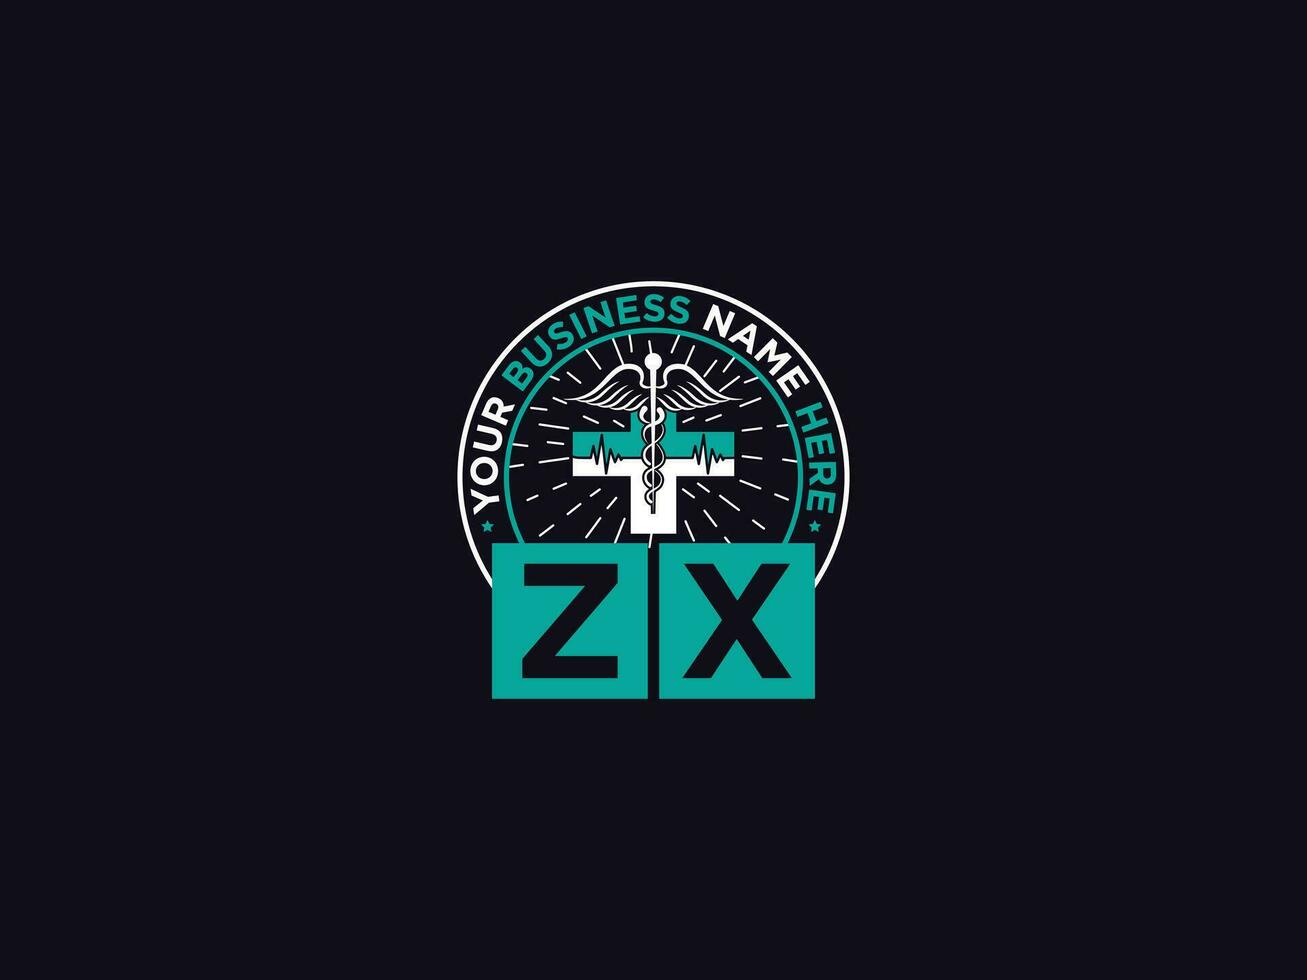 monogram zx klinisch logo, medisch zx xz logo brief vector voor u